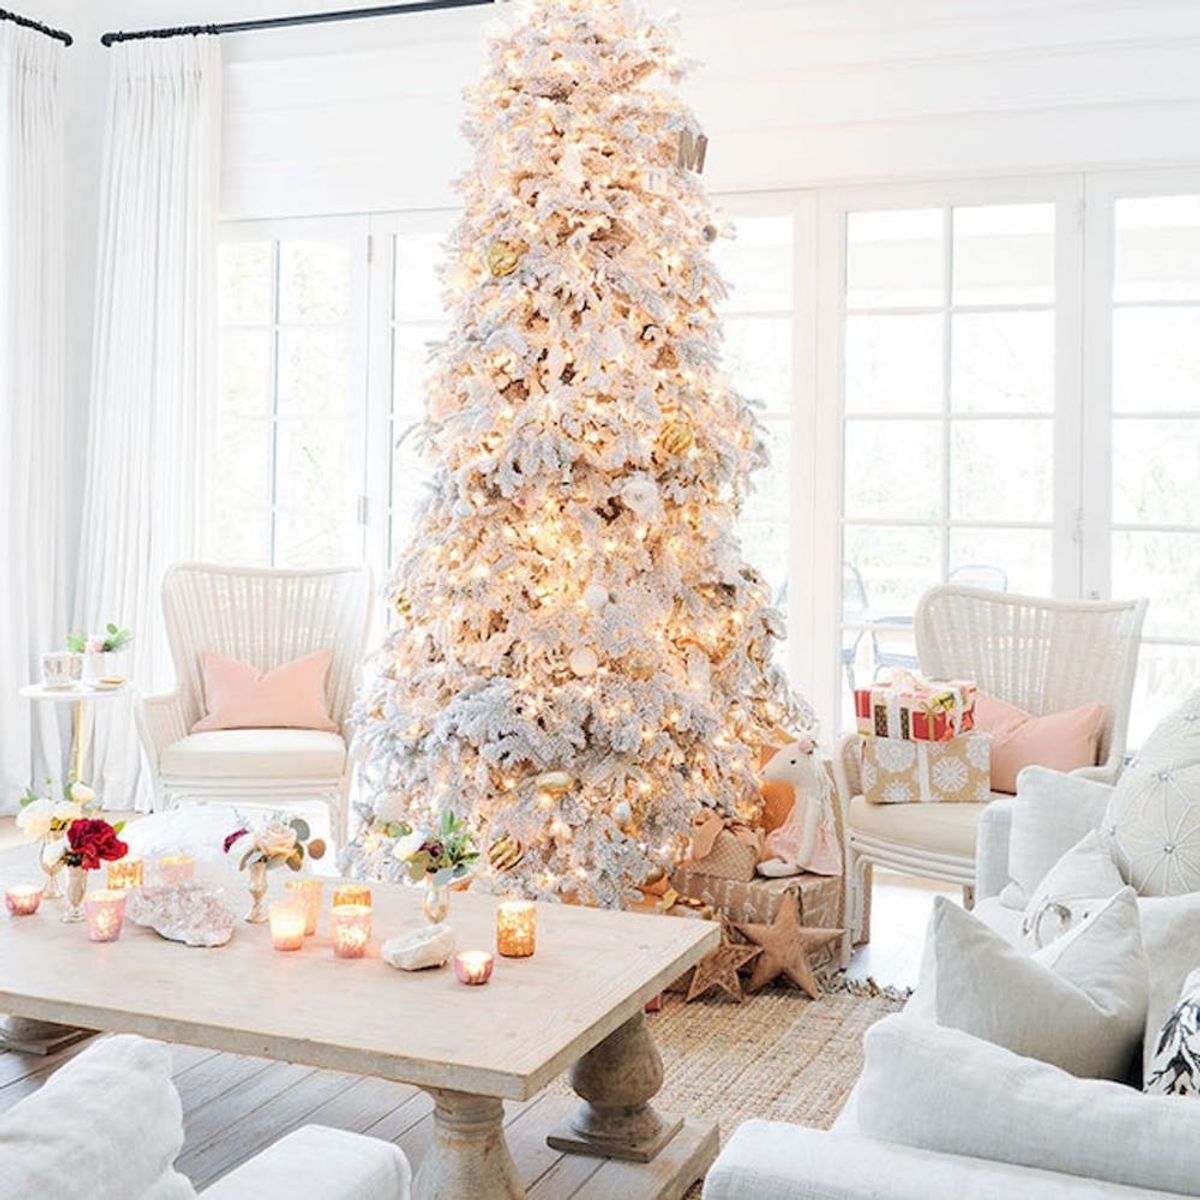 Get the Look of Monika Hibbs’ Pretty Pink Holiday Living Room